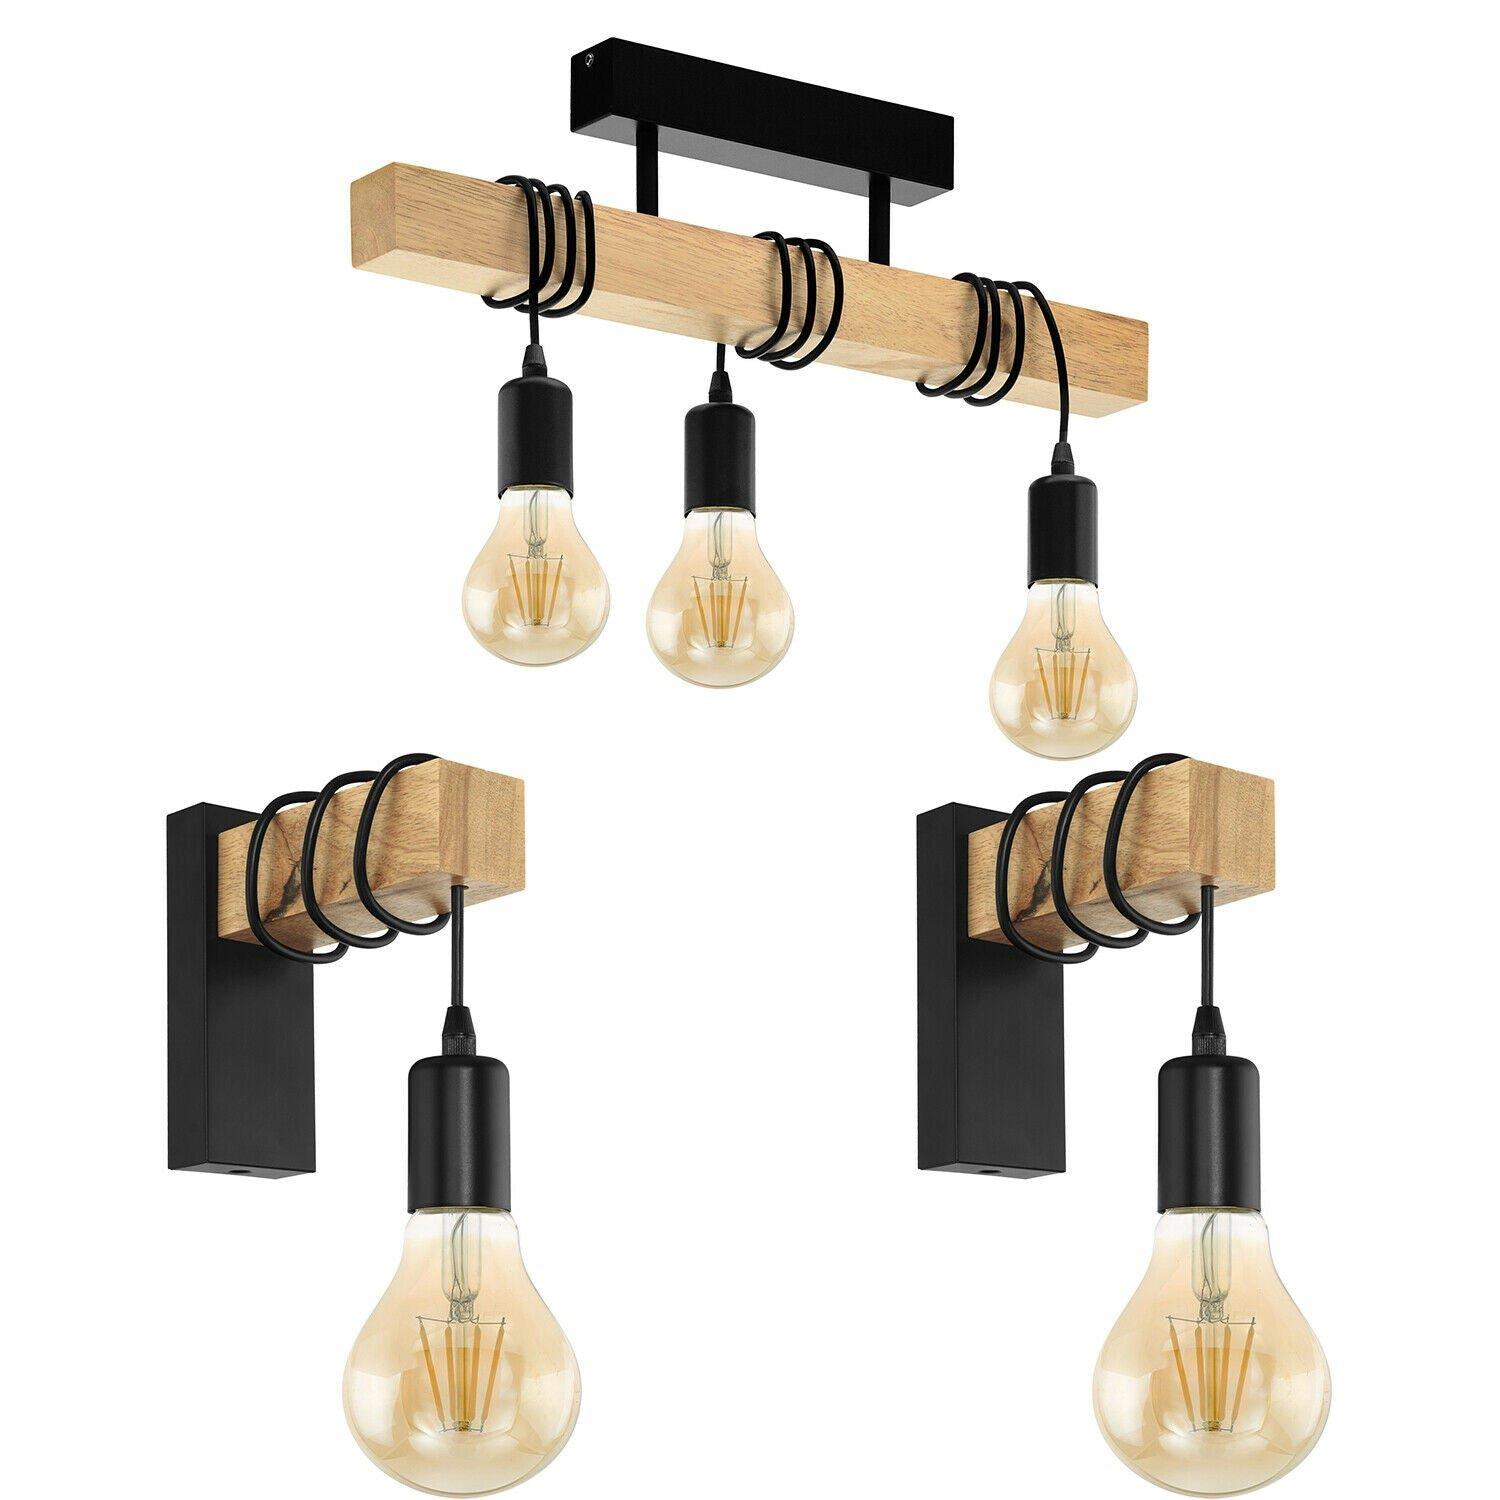 Ceiling Spot Light & 2x Matching Wall Lights Black & Wood Trendy Hanging Lamp